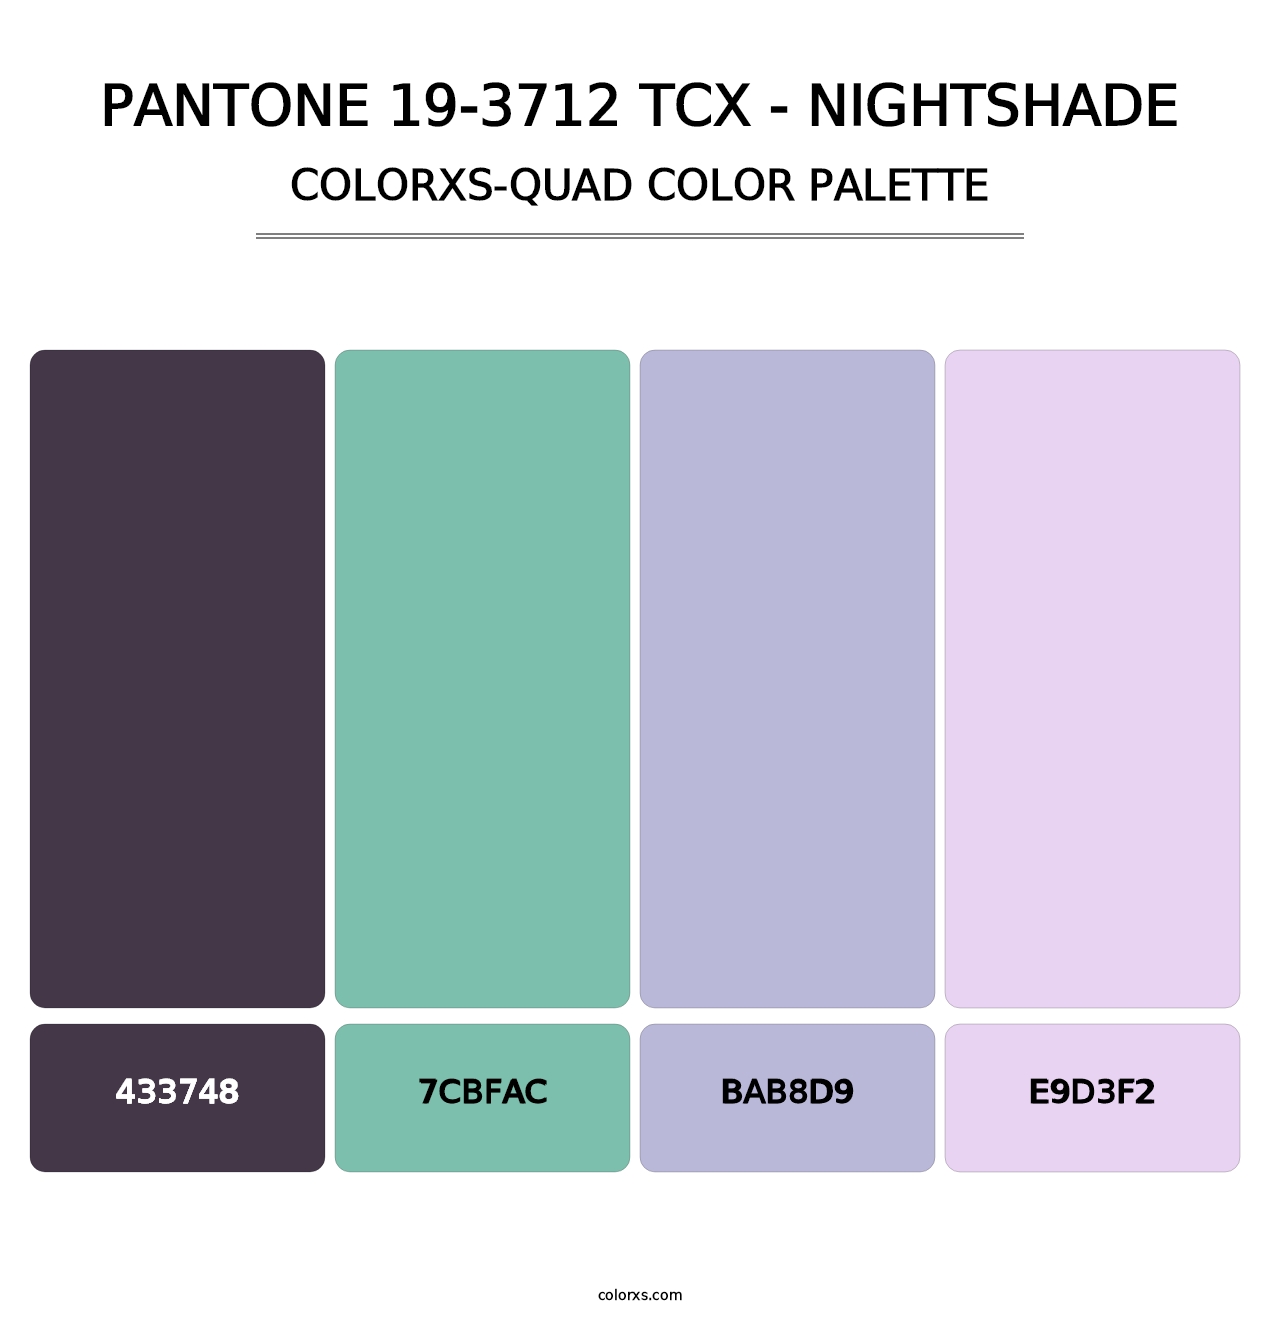 PANTONE 19-3712 TCX - Nightshade - Colorxs Quad Palette